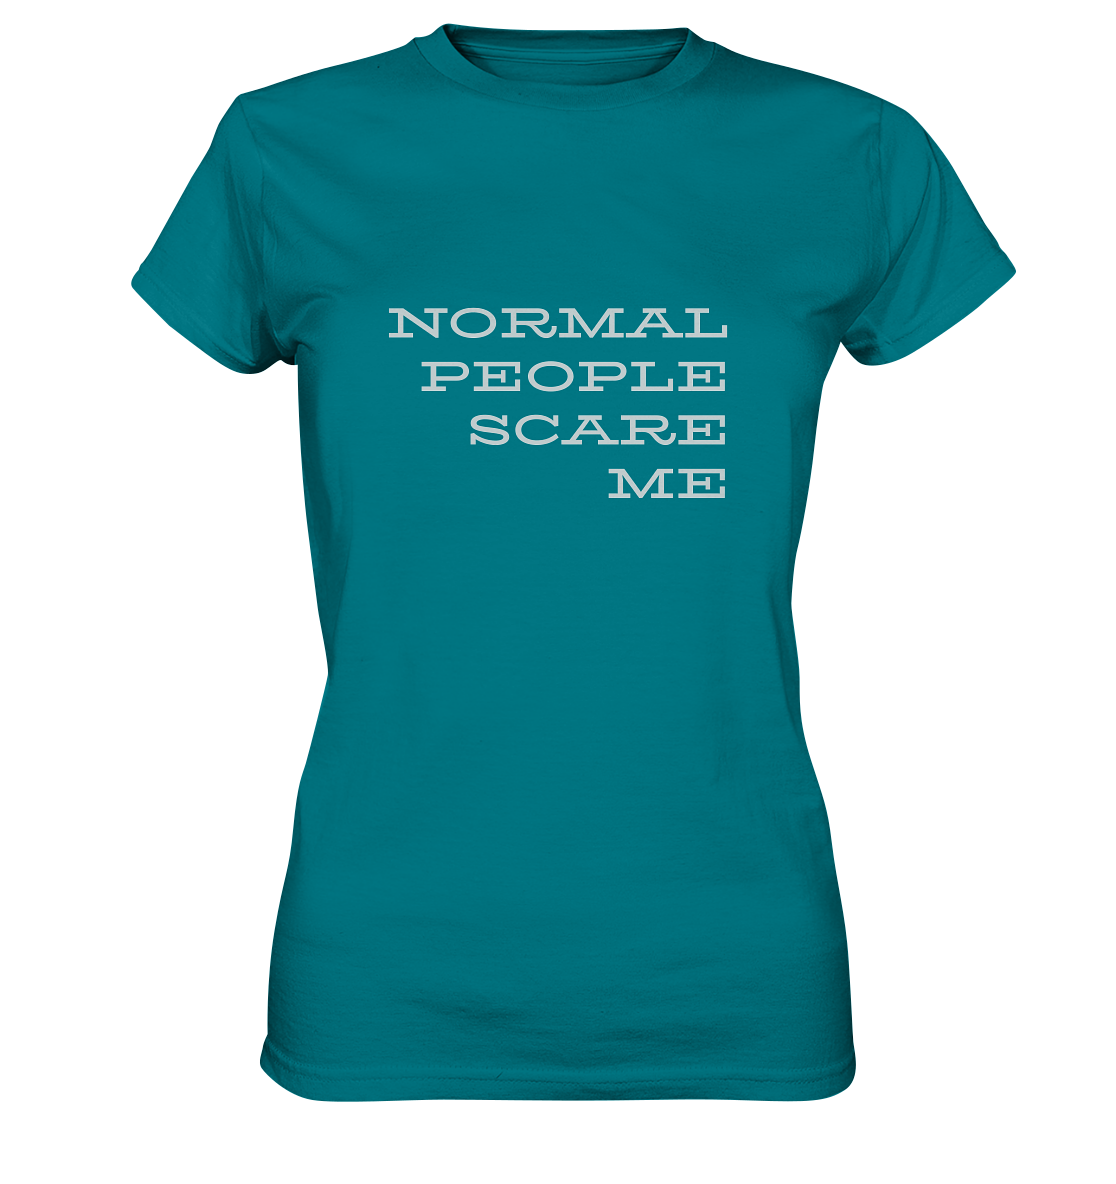 Damen-T-Shirt mit Aufdruck "Normal people scare me", türkis